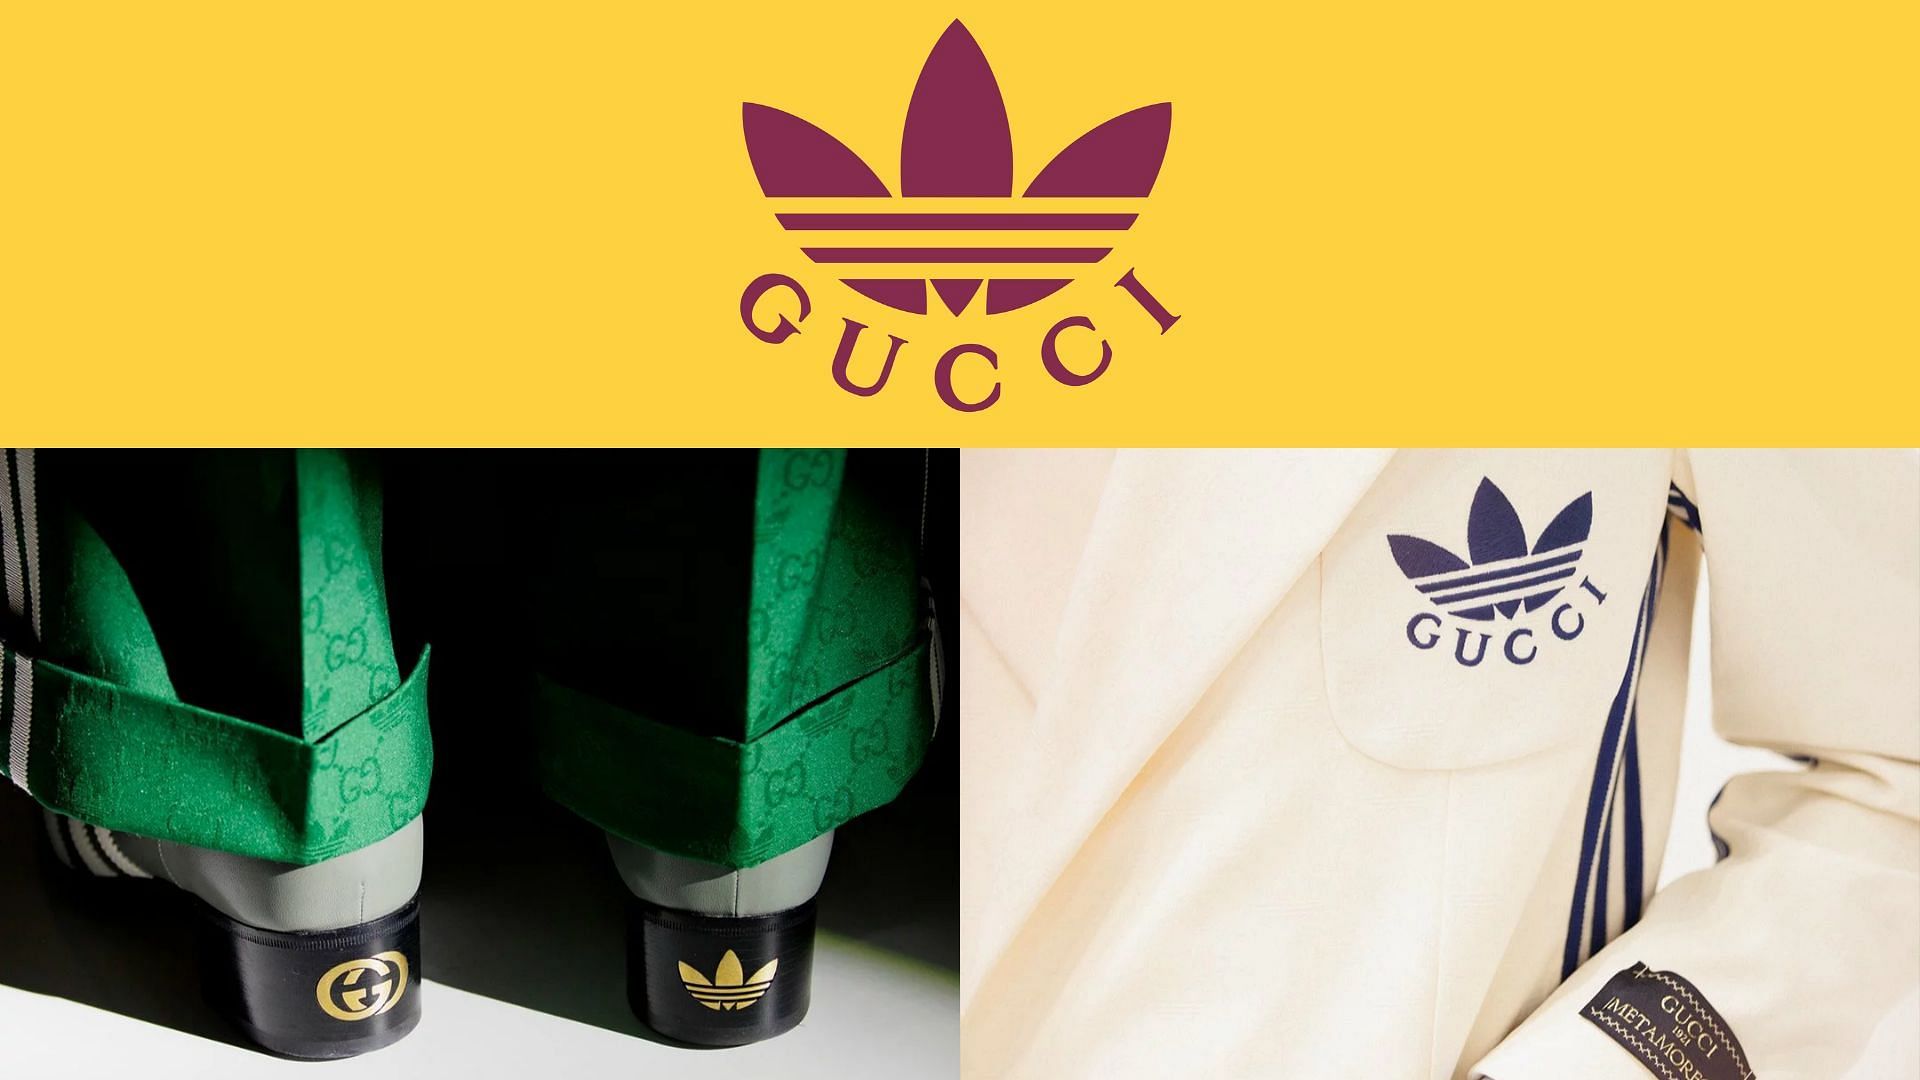 The Gucci x Adidas collaboration has not impressed many (Image via news.adidas.com/adidasorignals|Twitter)